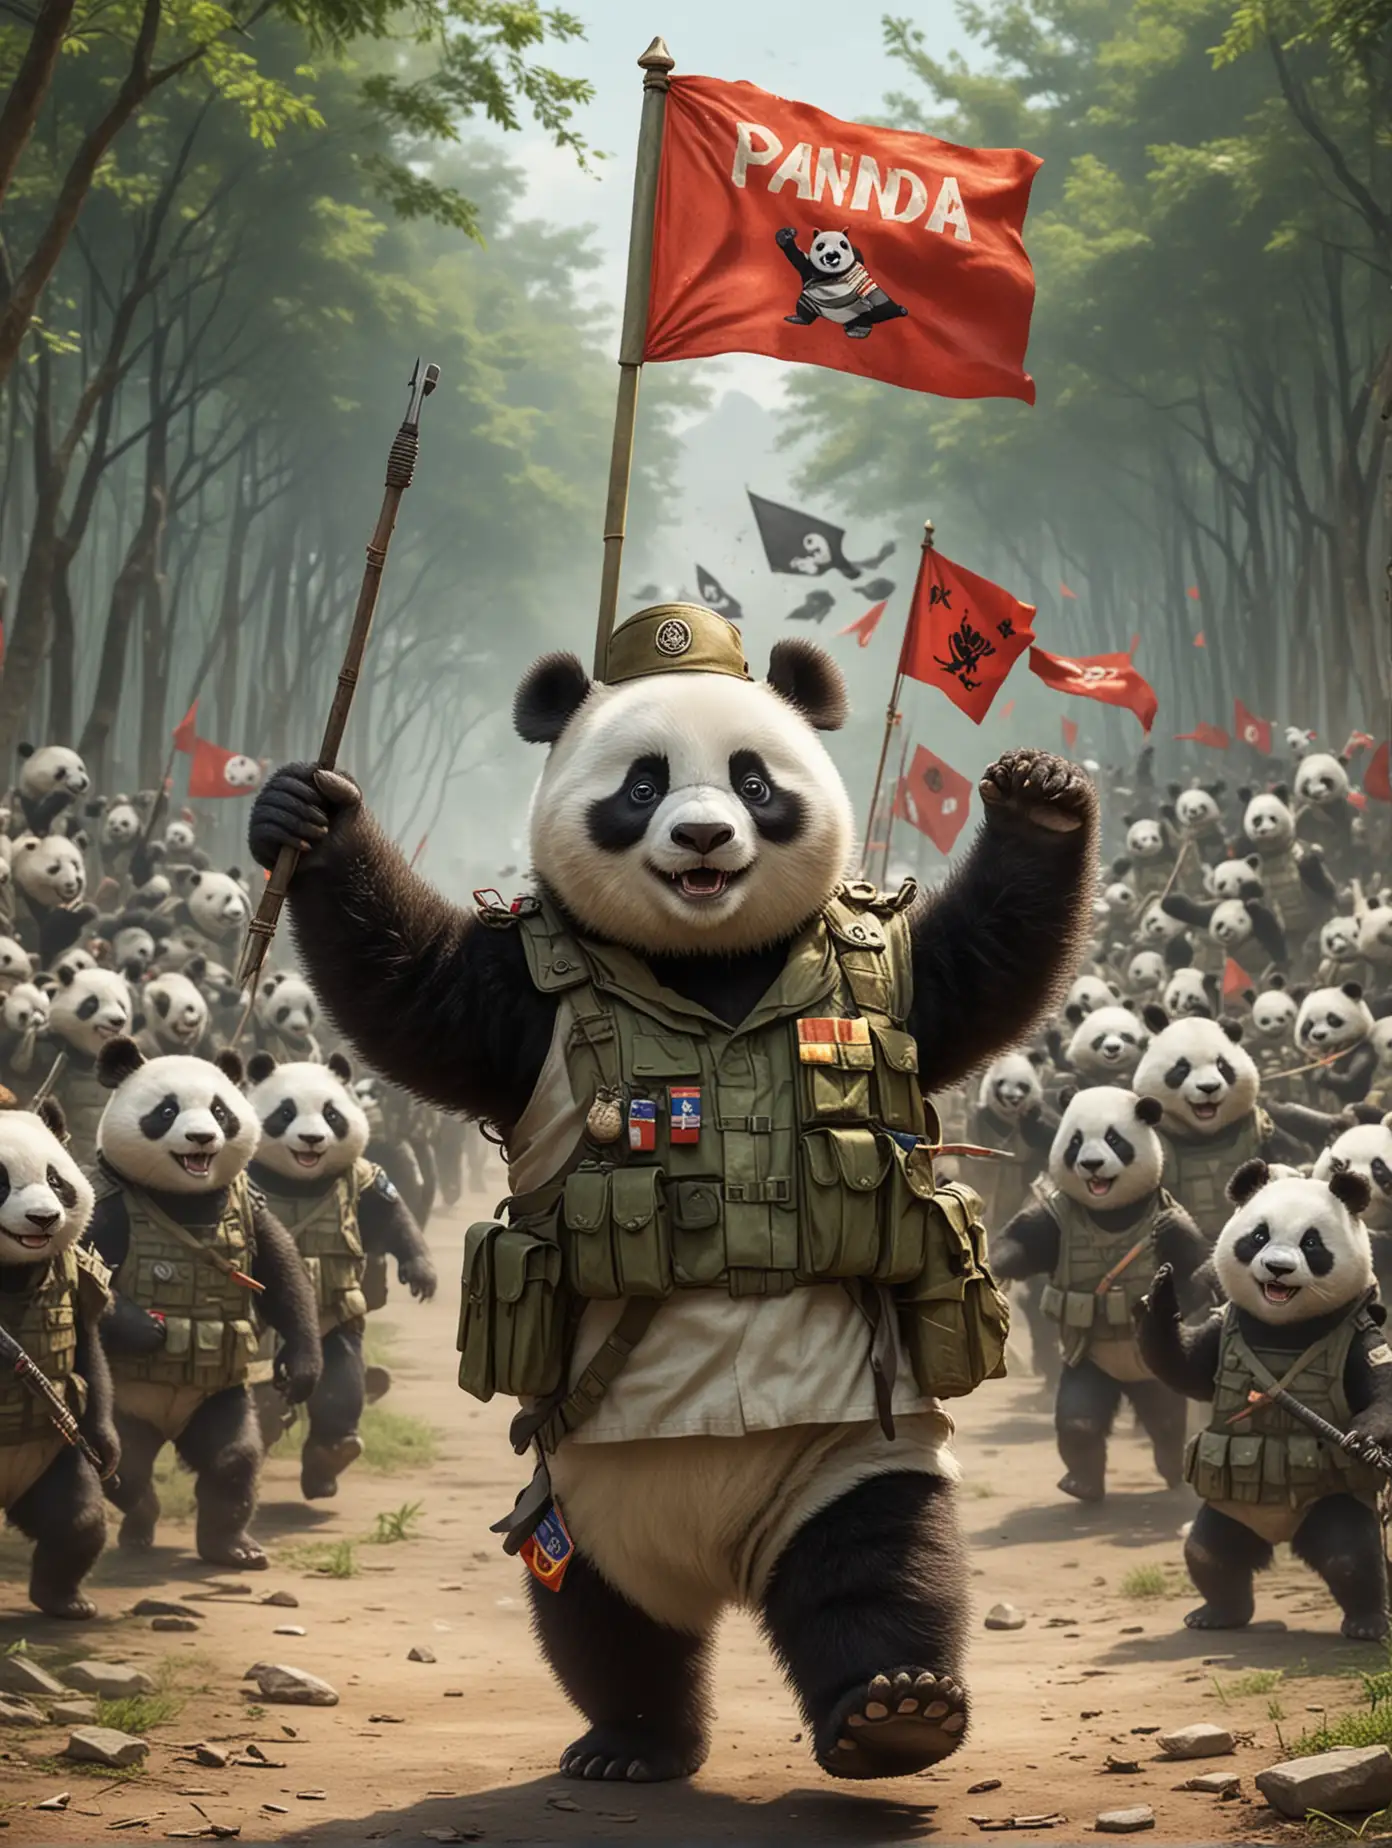 Panda-Military-Unit-Celebrates-Victory-with-Flag-Waving